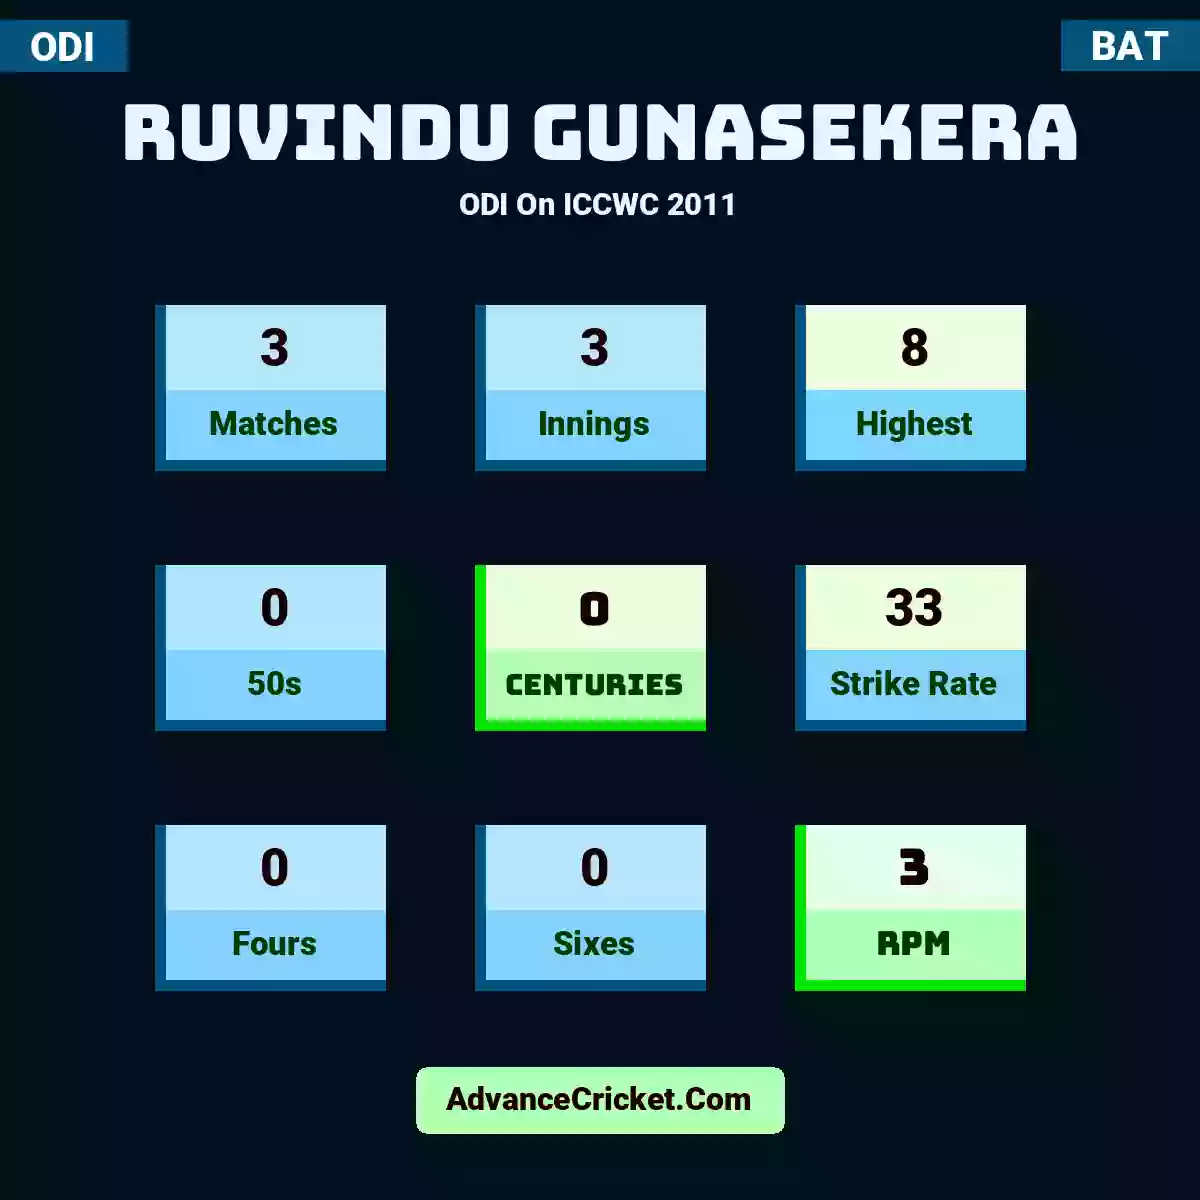 Ruvindu Gunasekera ODI  On ICCWC 2011, Ruvindu Gunasekera played 3 matches, scored 8 runs as highest, 0 half-centuries, and 0 centuries, with a strike rate of 33. R.Gunasekera hit 0 fours and 0 sixes, with an RPM of 3.